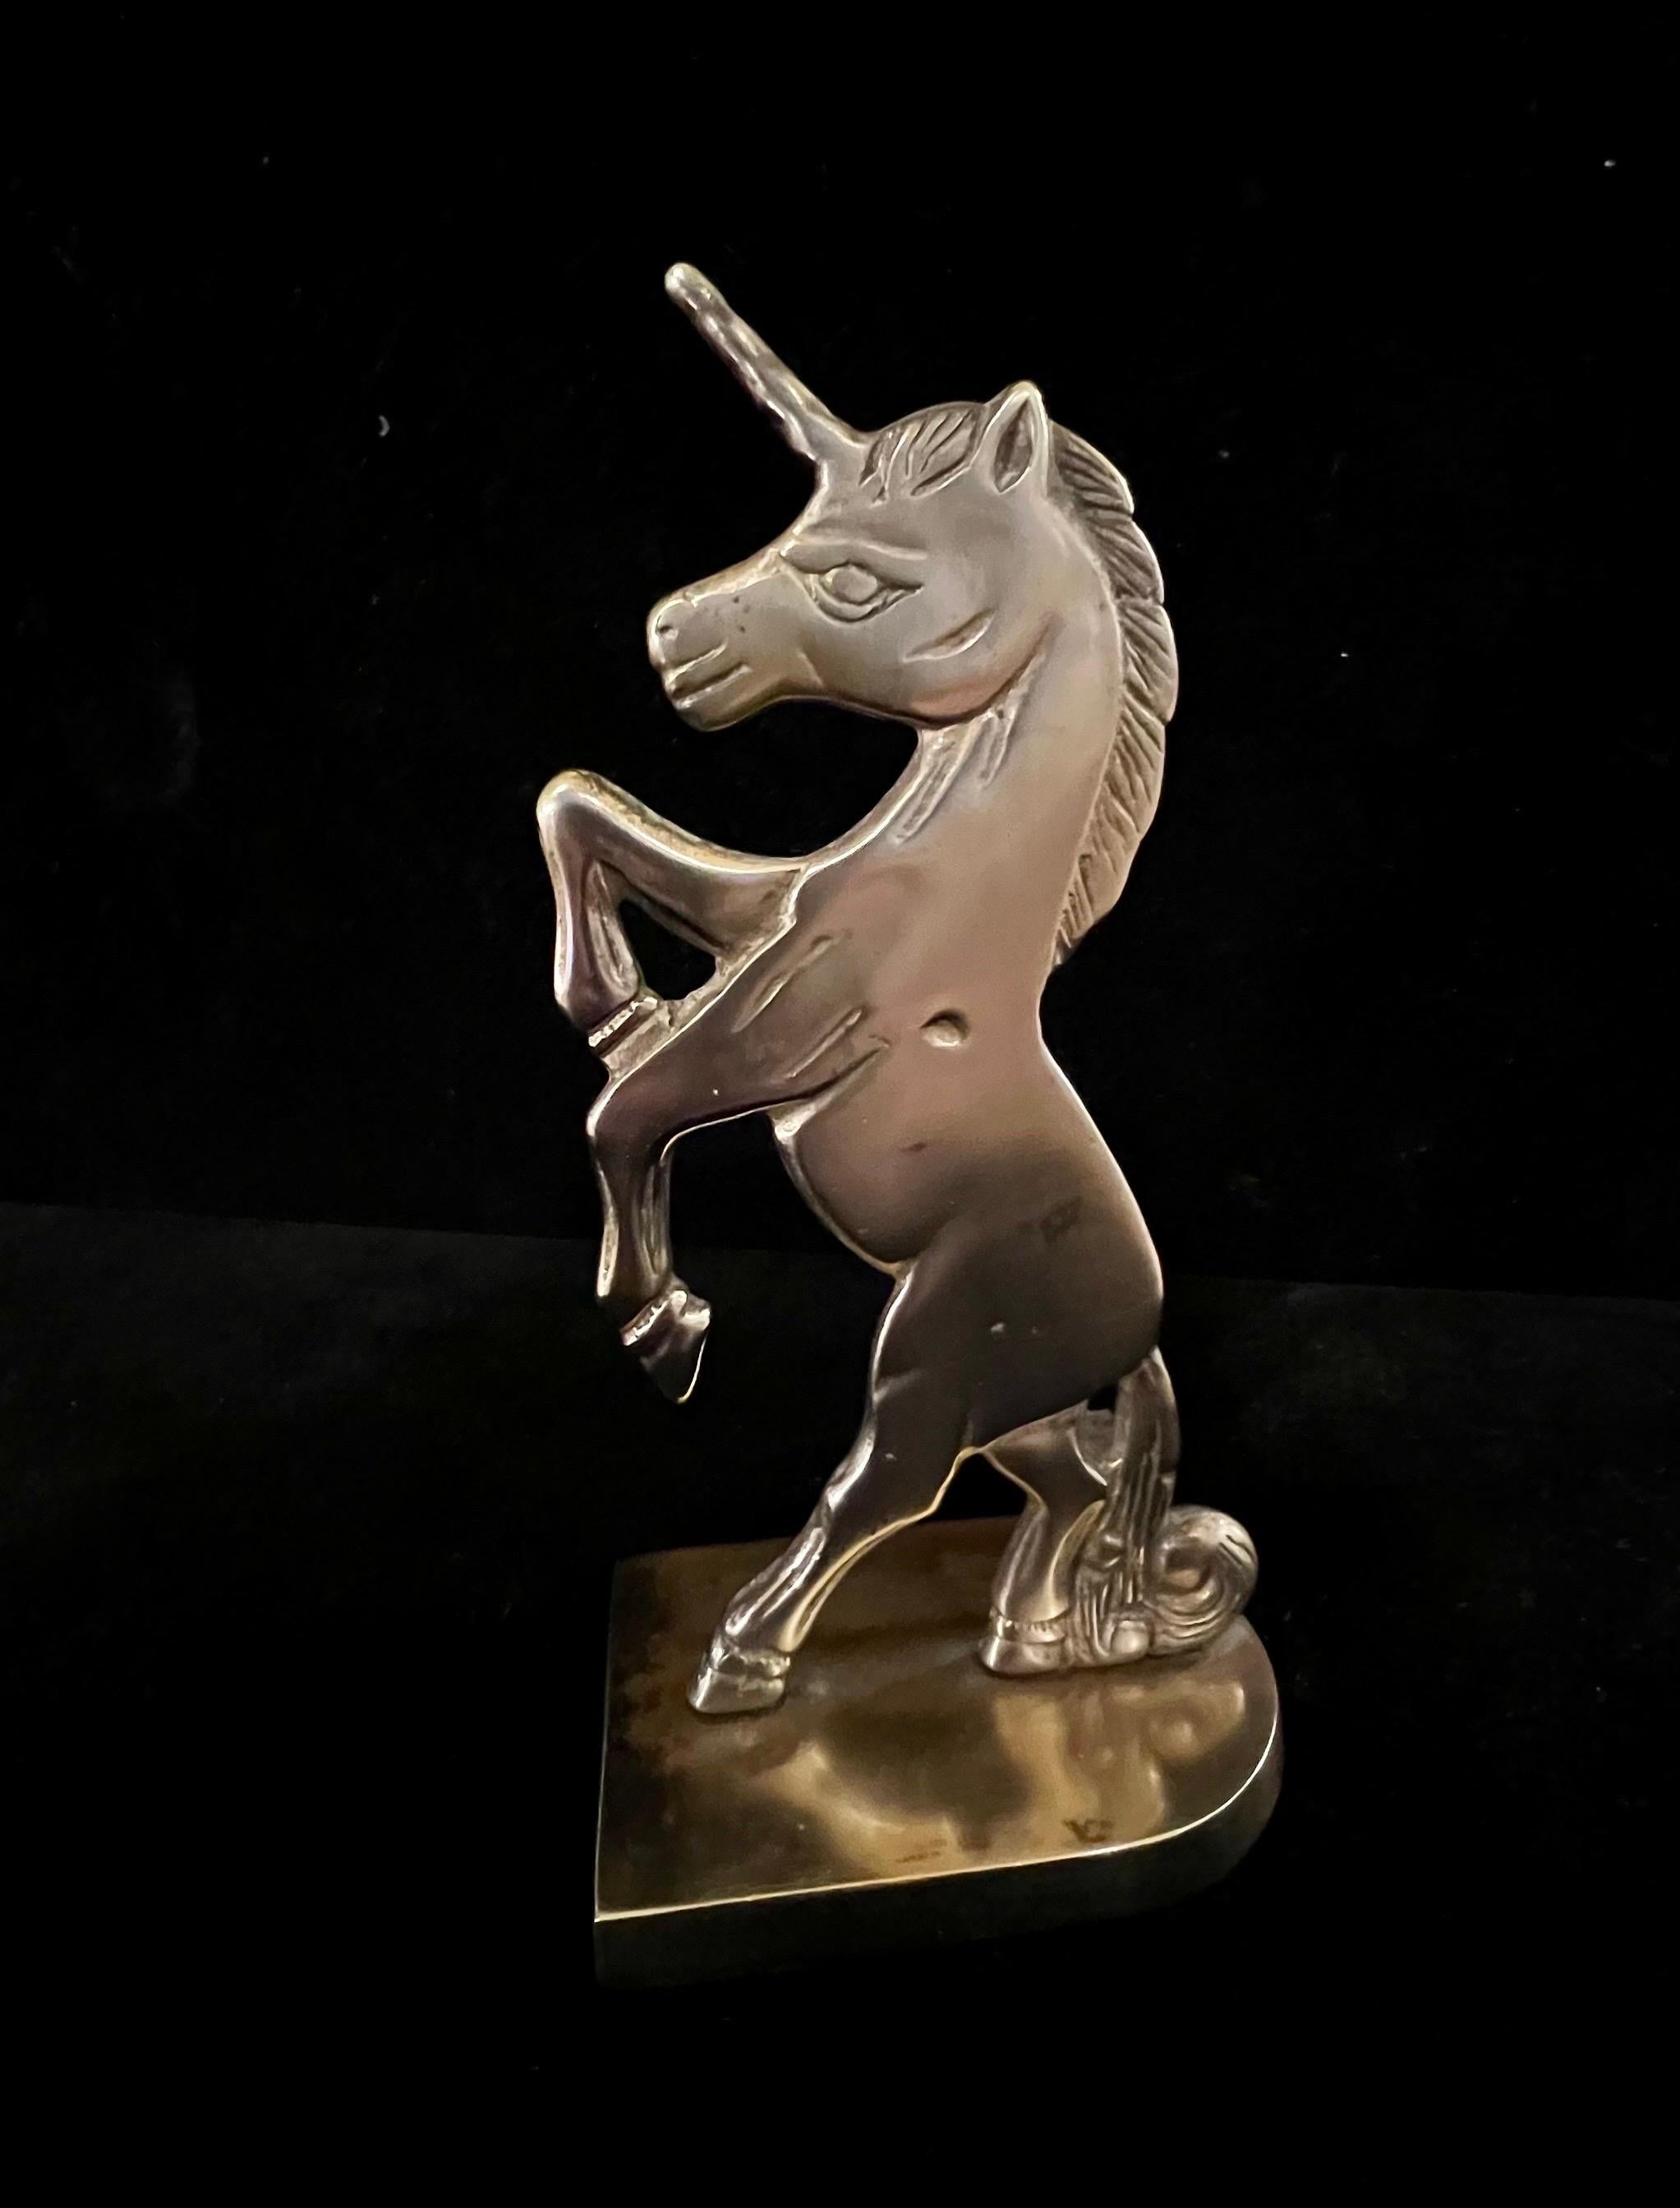 vintage brass unicorn figurine